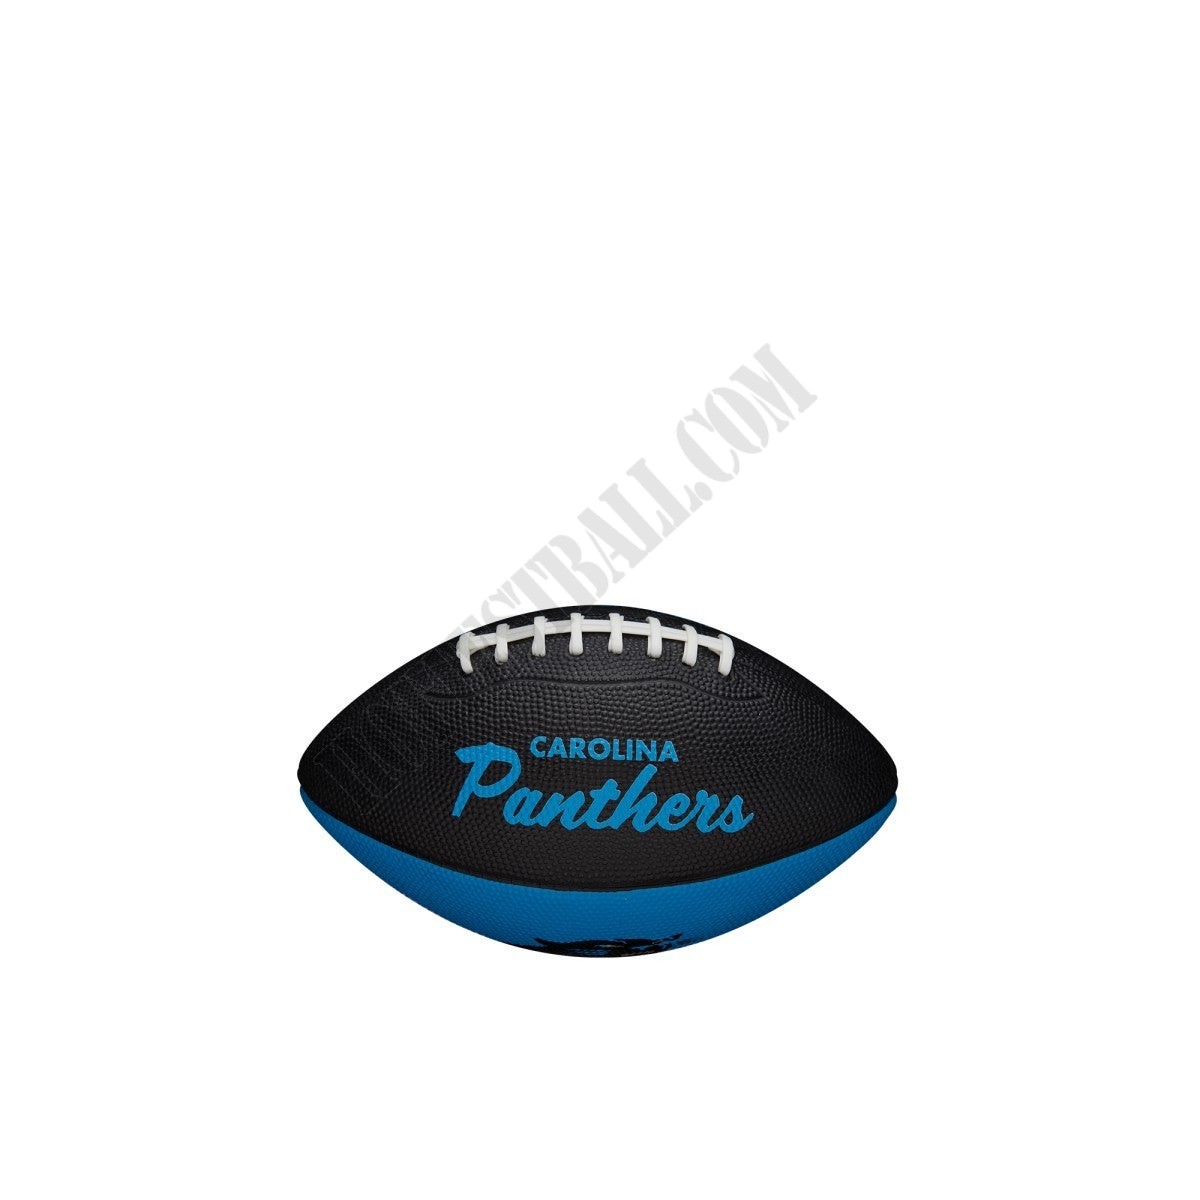 NFL Retro Mini Football - Carolina Panthers ● Wilson Promotions - NFL Retro Mini Football - Carolina Panthers ● Wilson Promotions